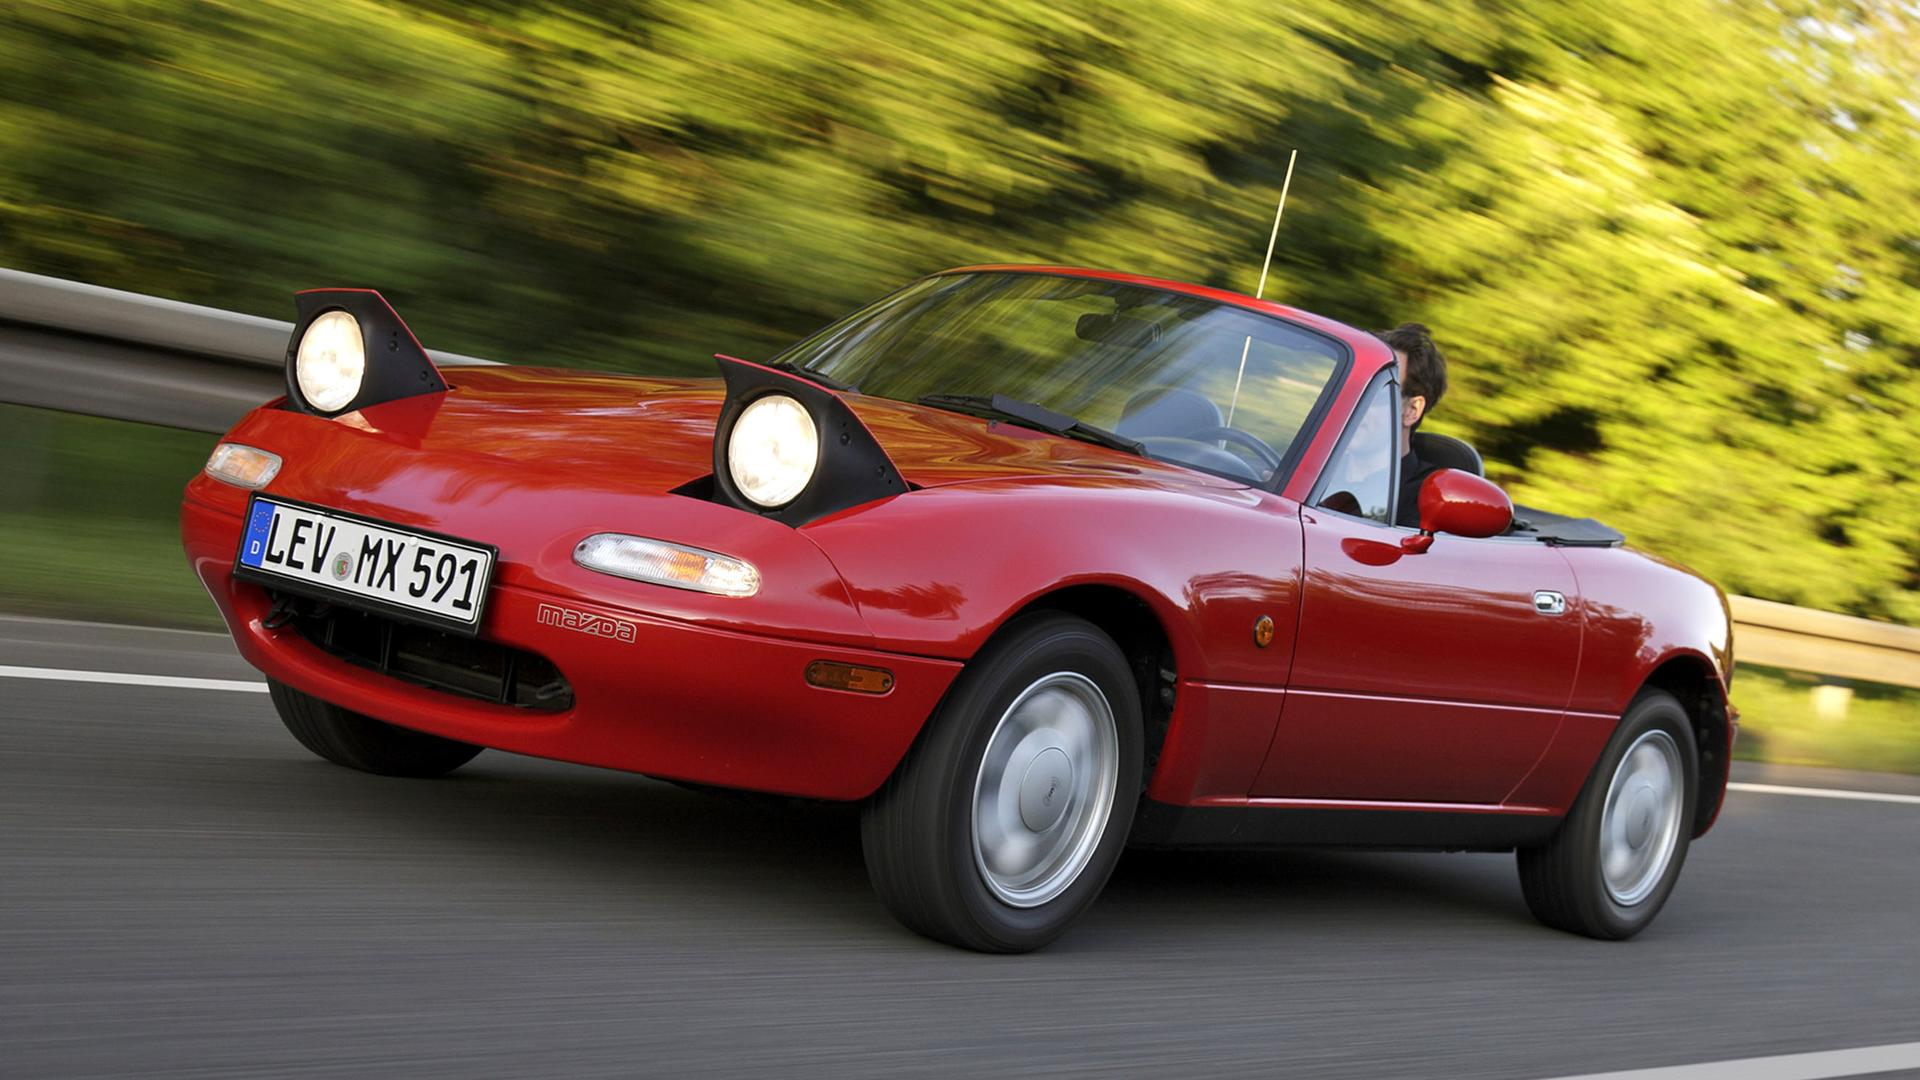 10 février 1989 – Mazda lance la Miata – L'annuel de l'automobile